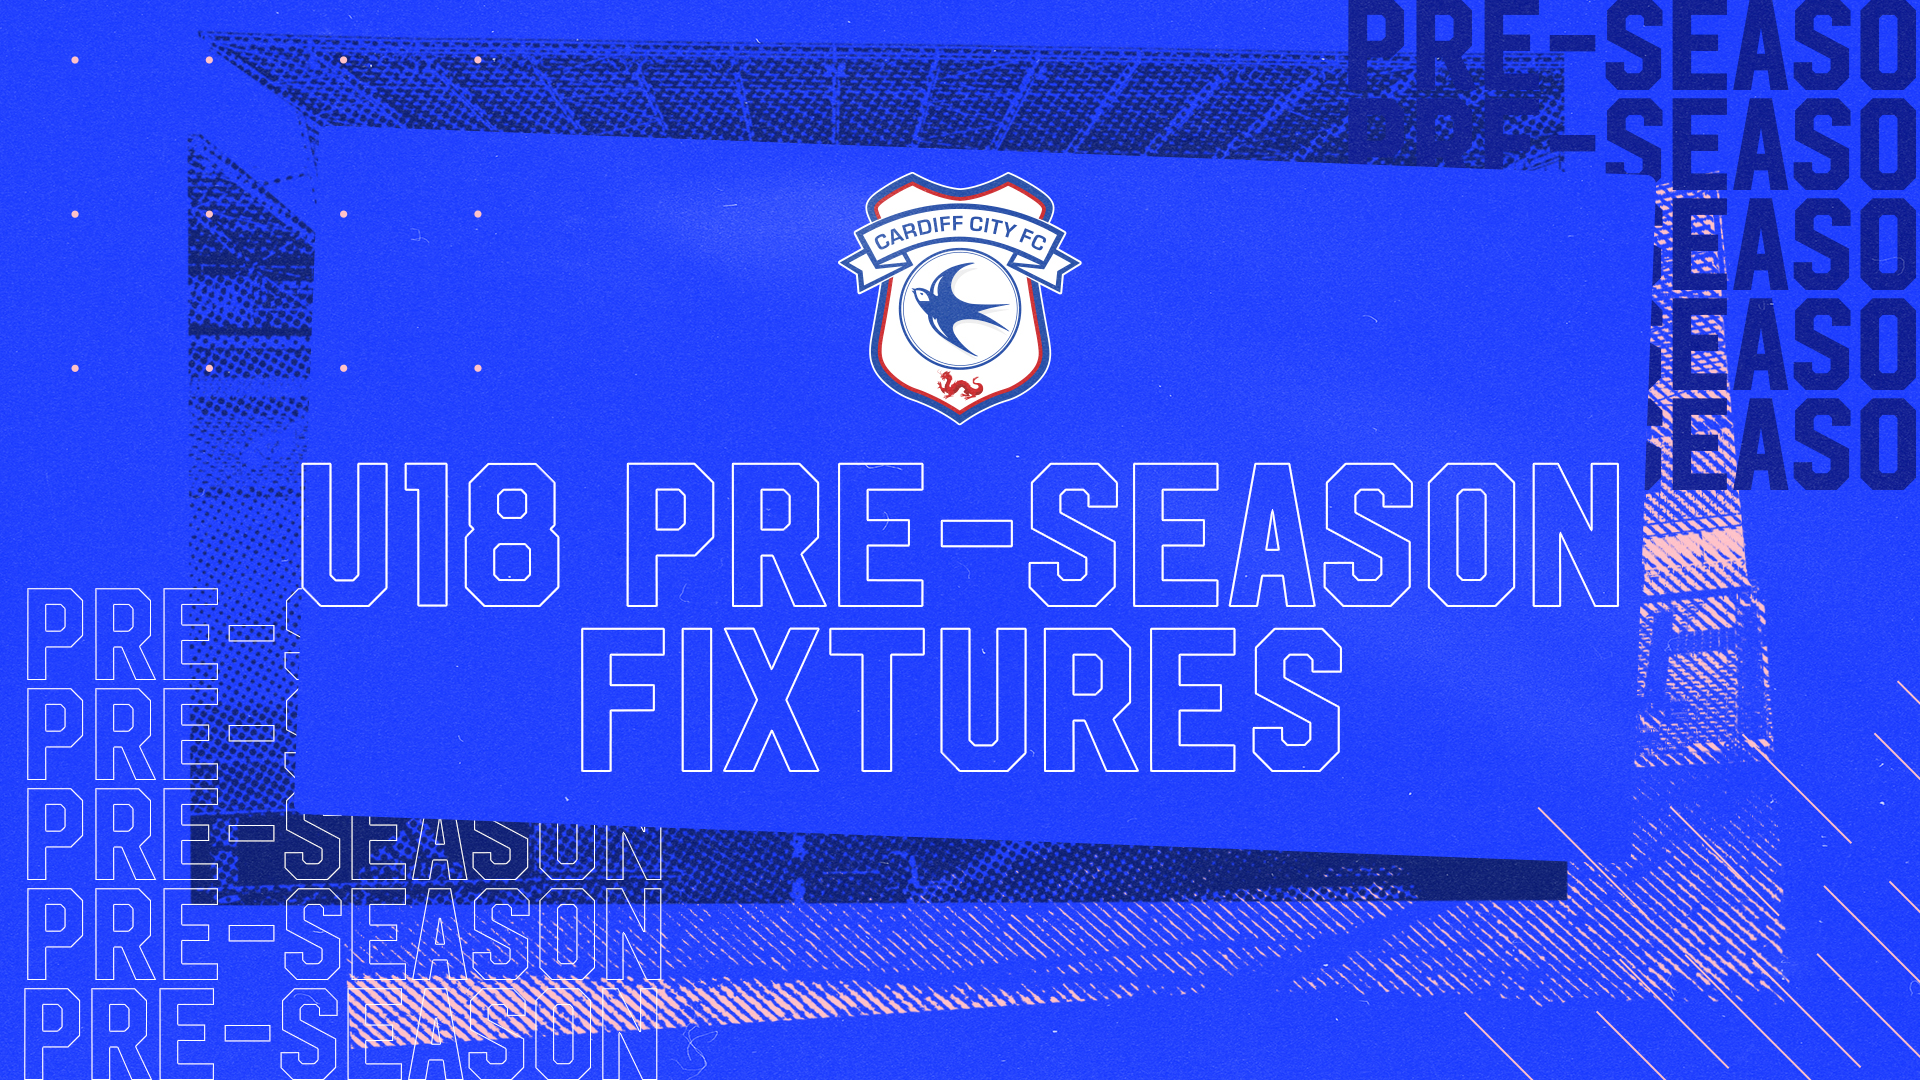 U18 pre-season fixtures